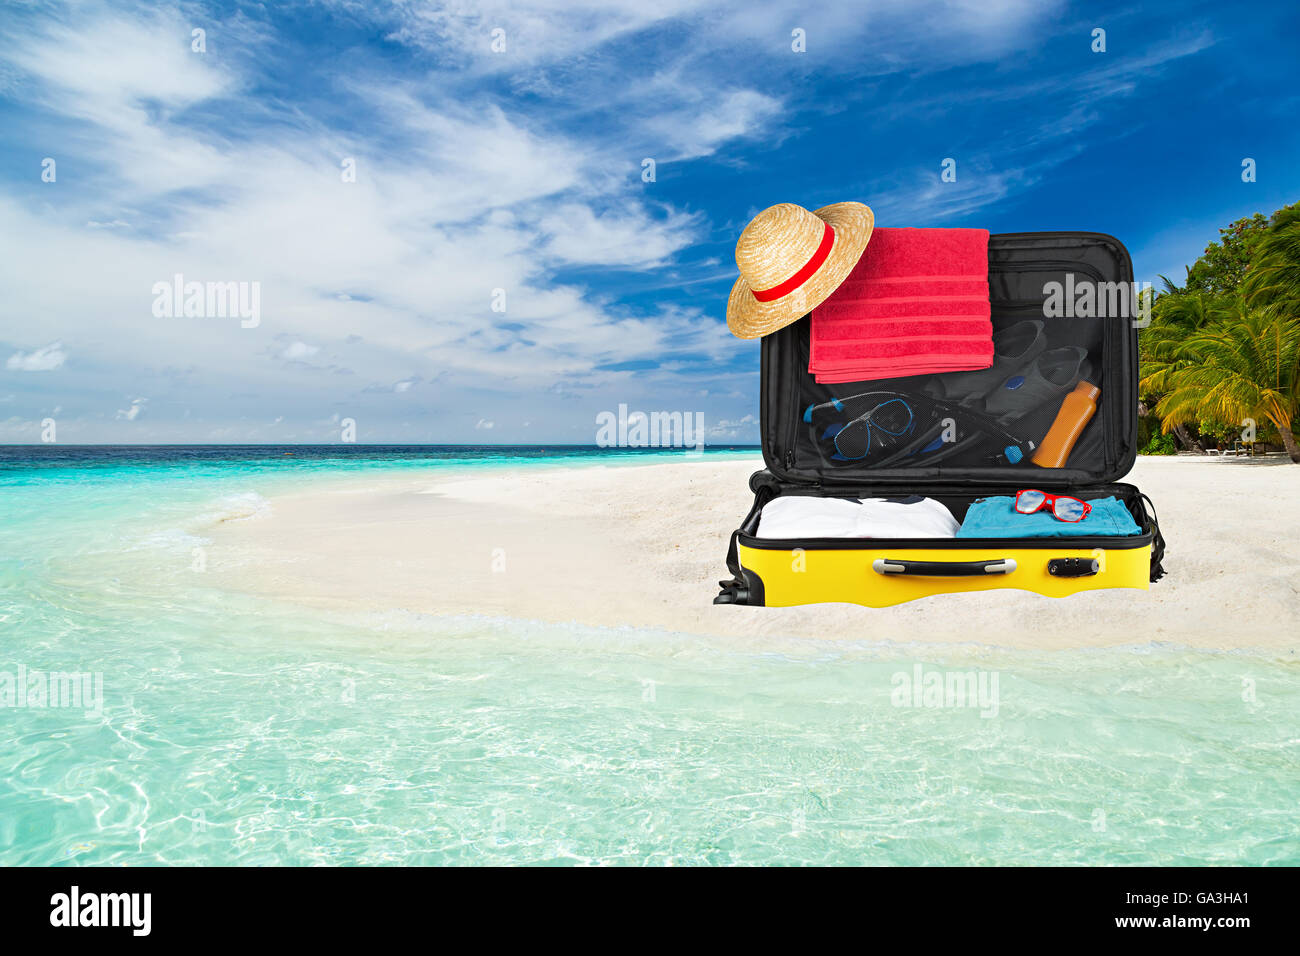 suitcase on paradise beach with crystall clear ocean Stock Photo